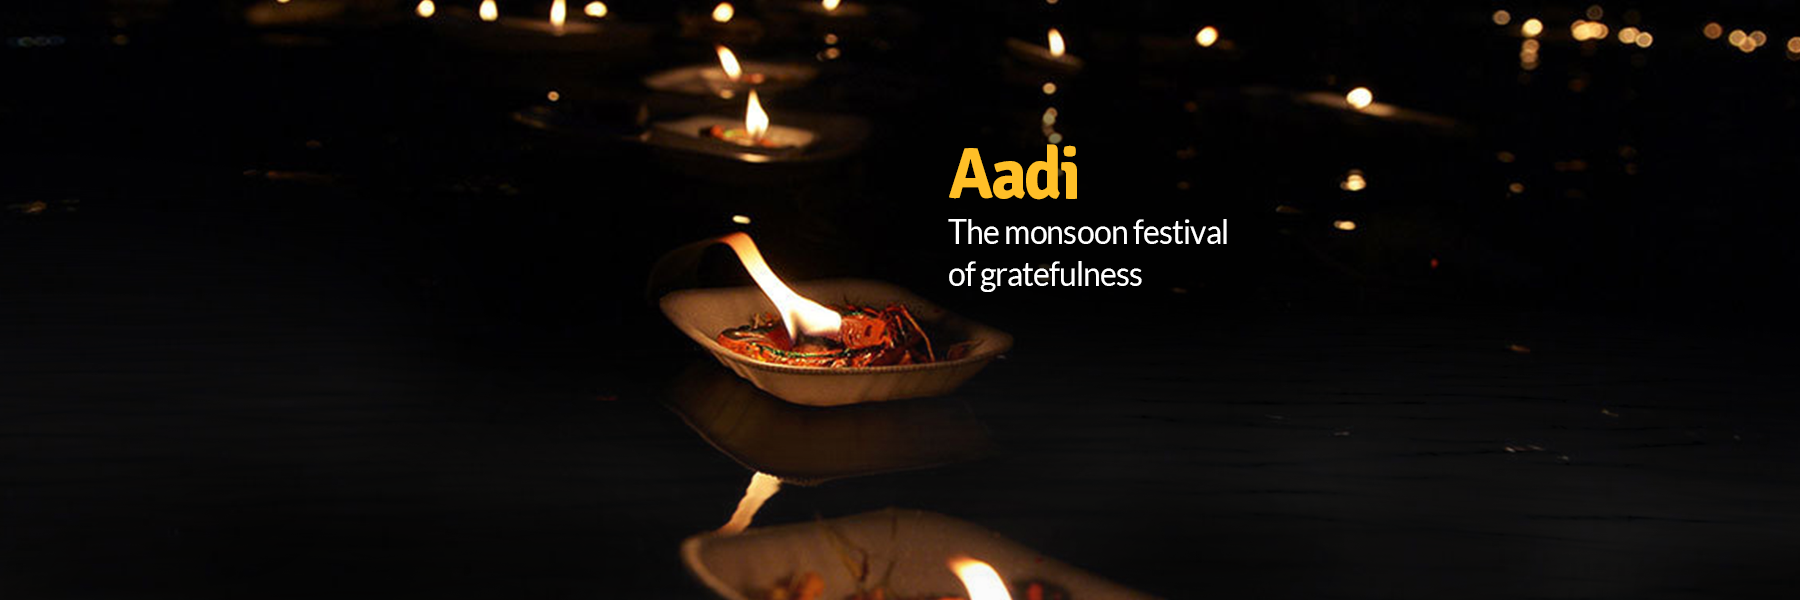 Aadi the Monsoon Festival of gratefulness. FromIndia.com